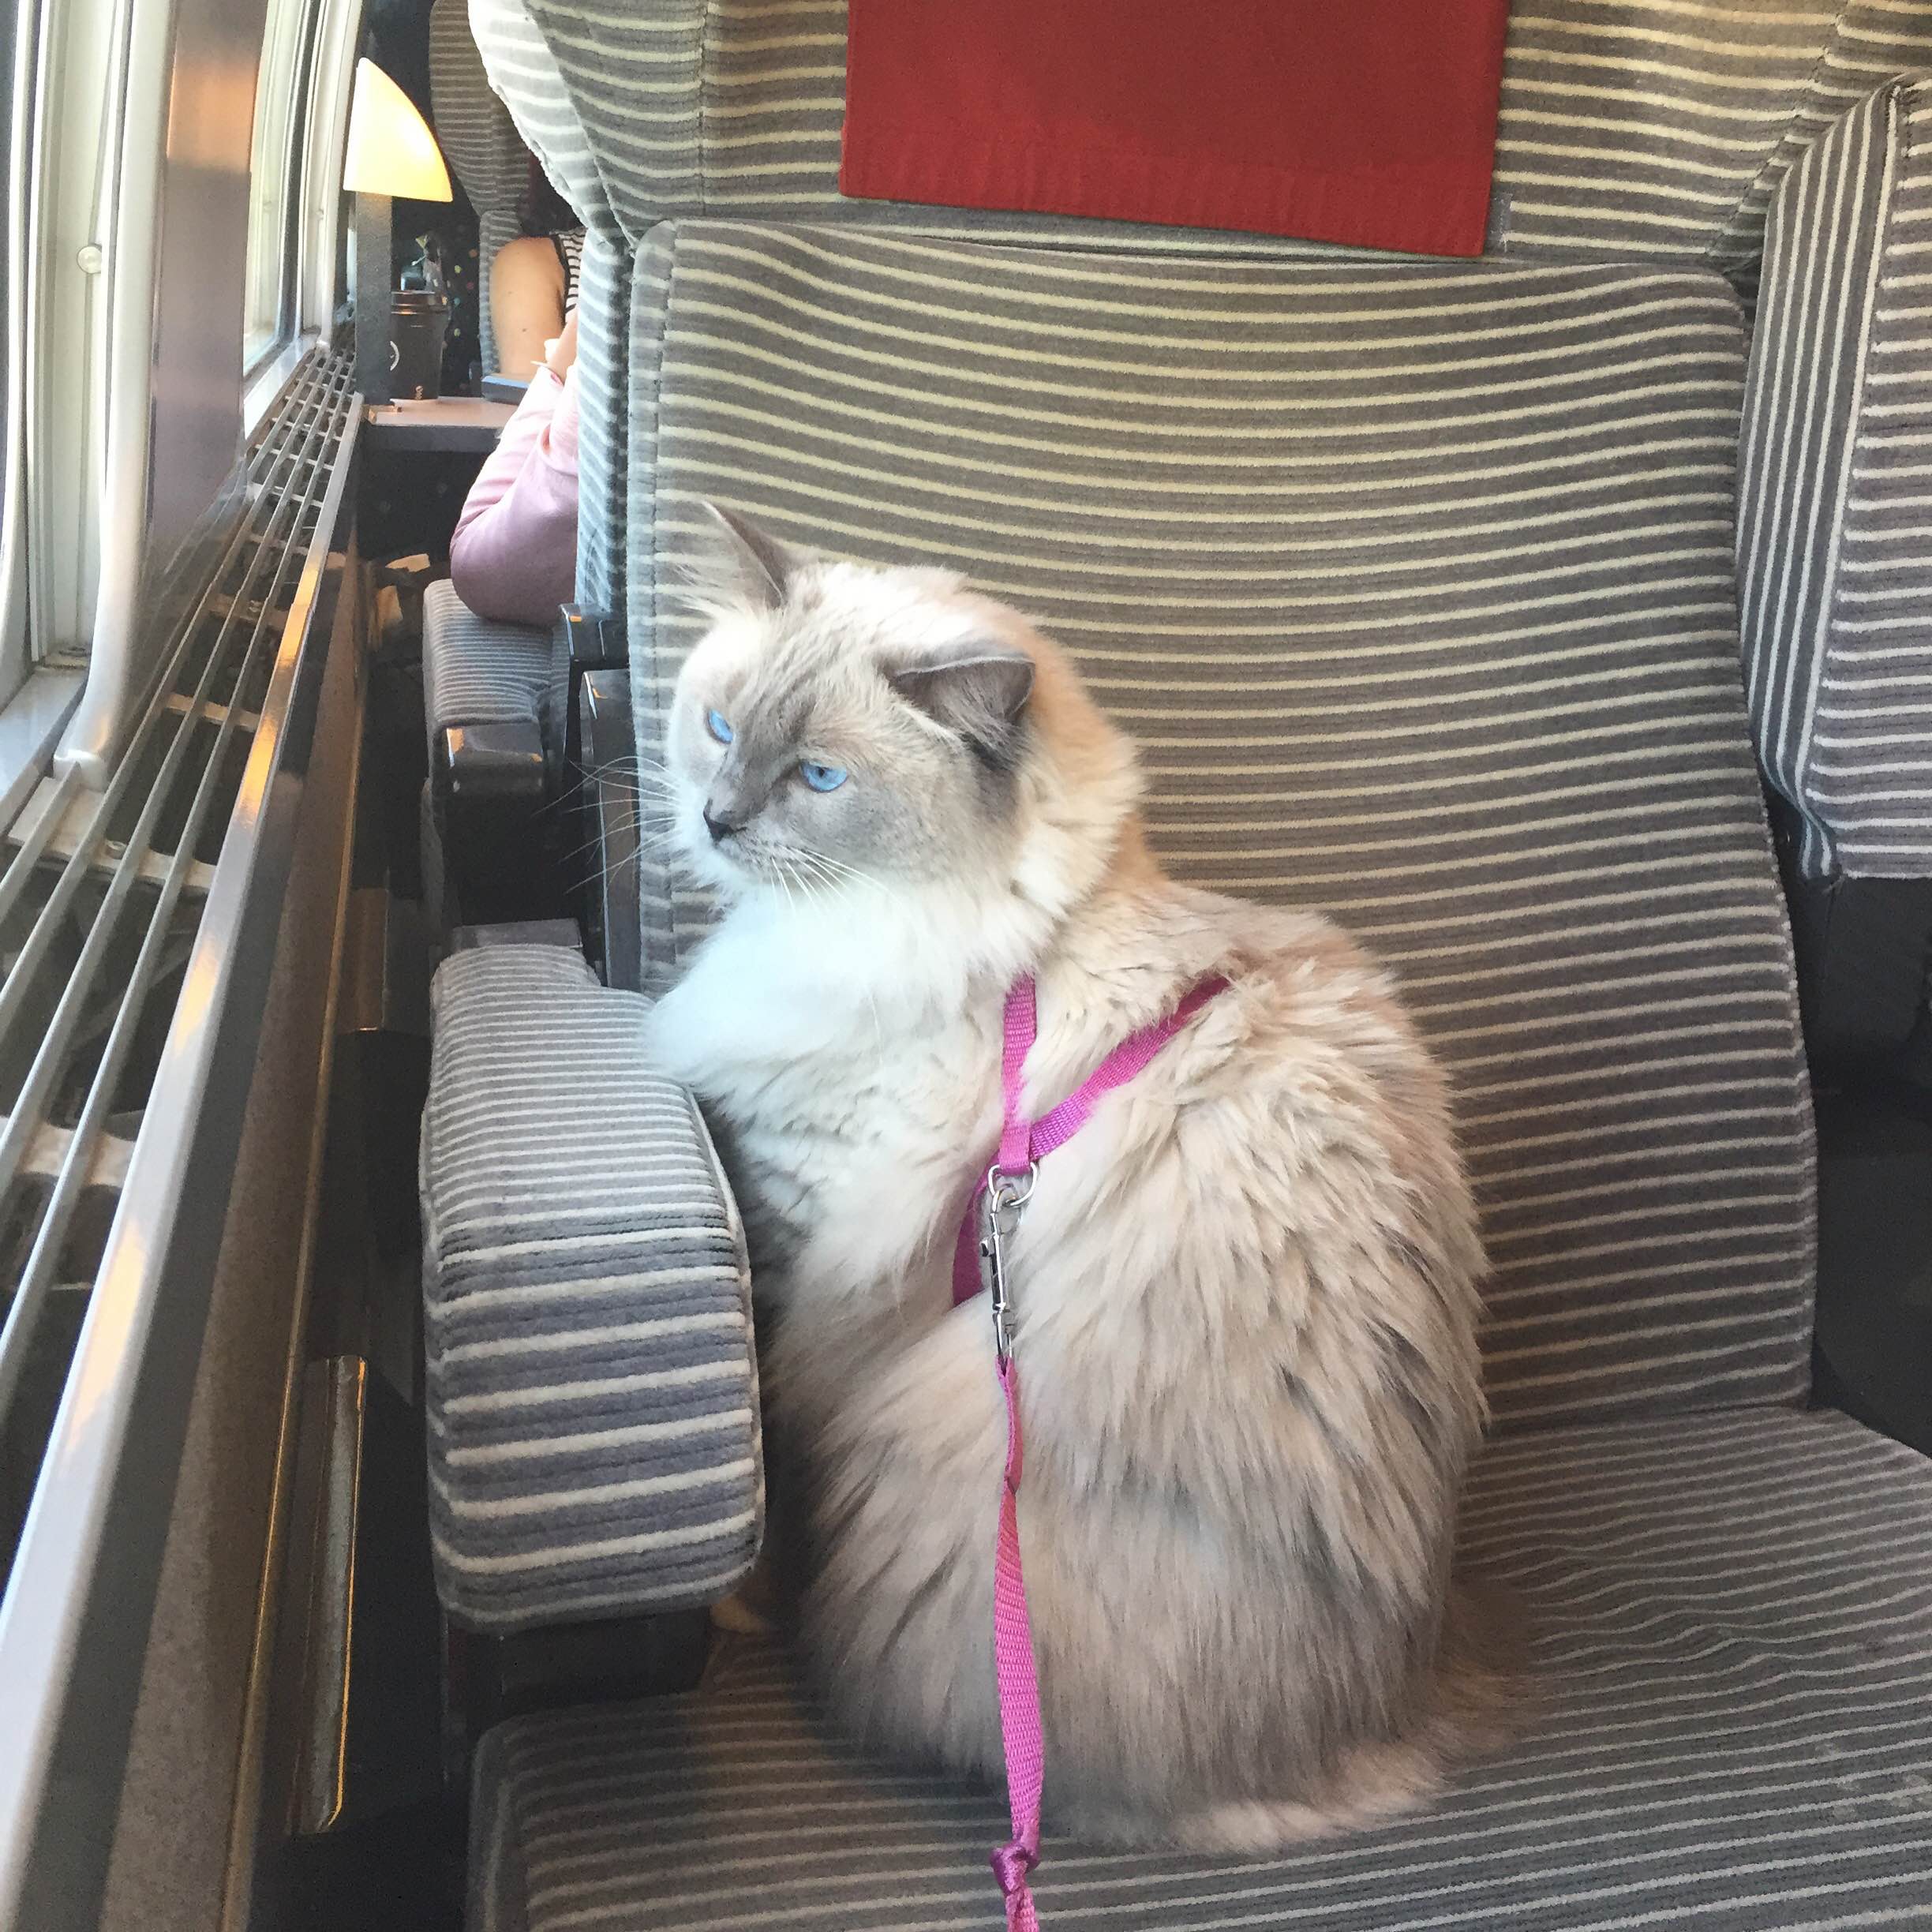 https://jamaissansmaurice.com/wp-content/uploads/2016/07/voyager-animal-chien-train.jpg